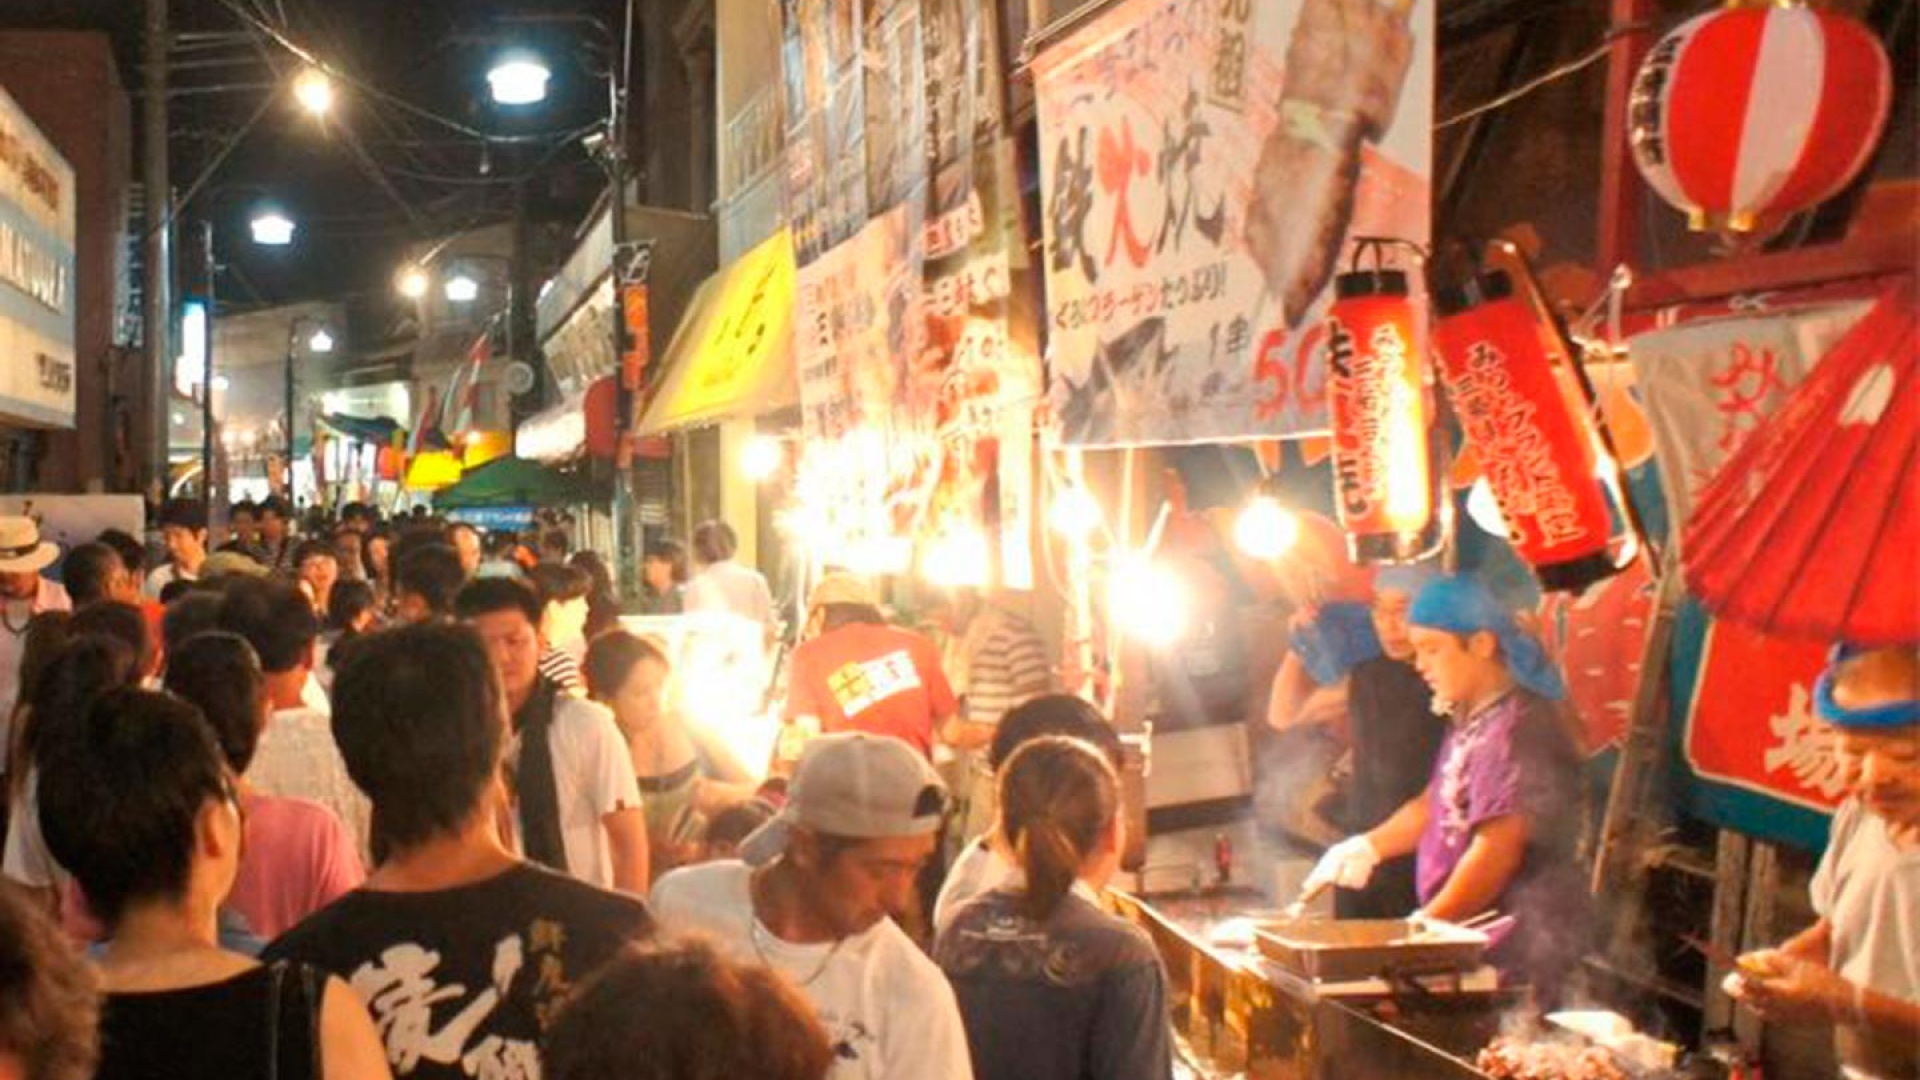 Miura Night Market